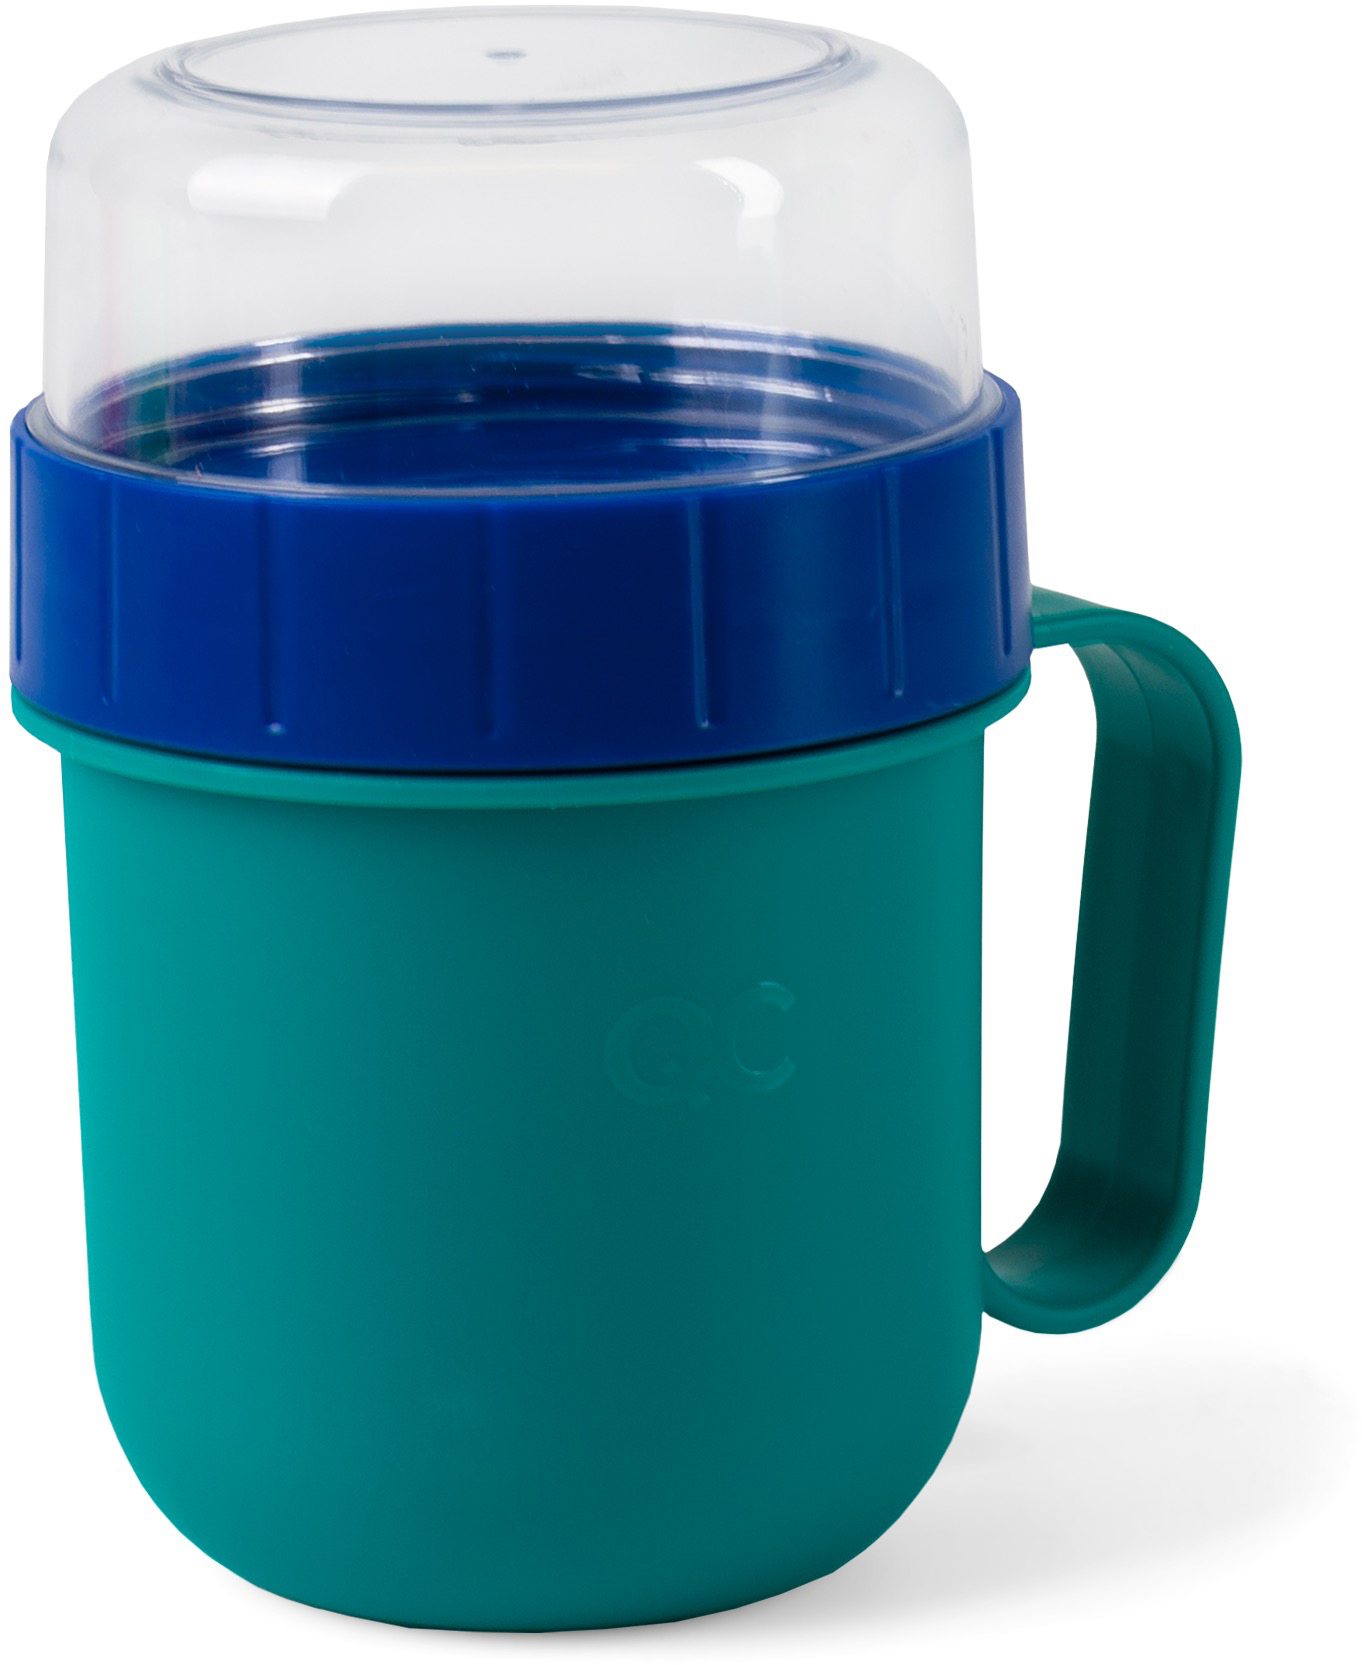 ROOST Lunch mug 13x10x15mm 497727 sporty petrol/cobalt blue sporty petrol/cobalt blue